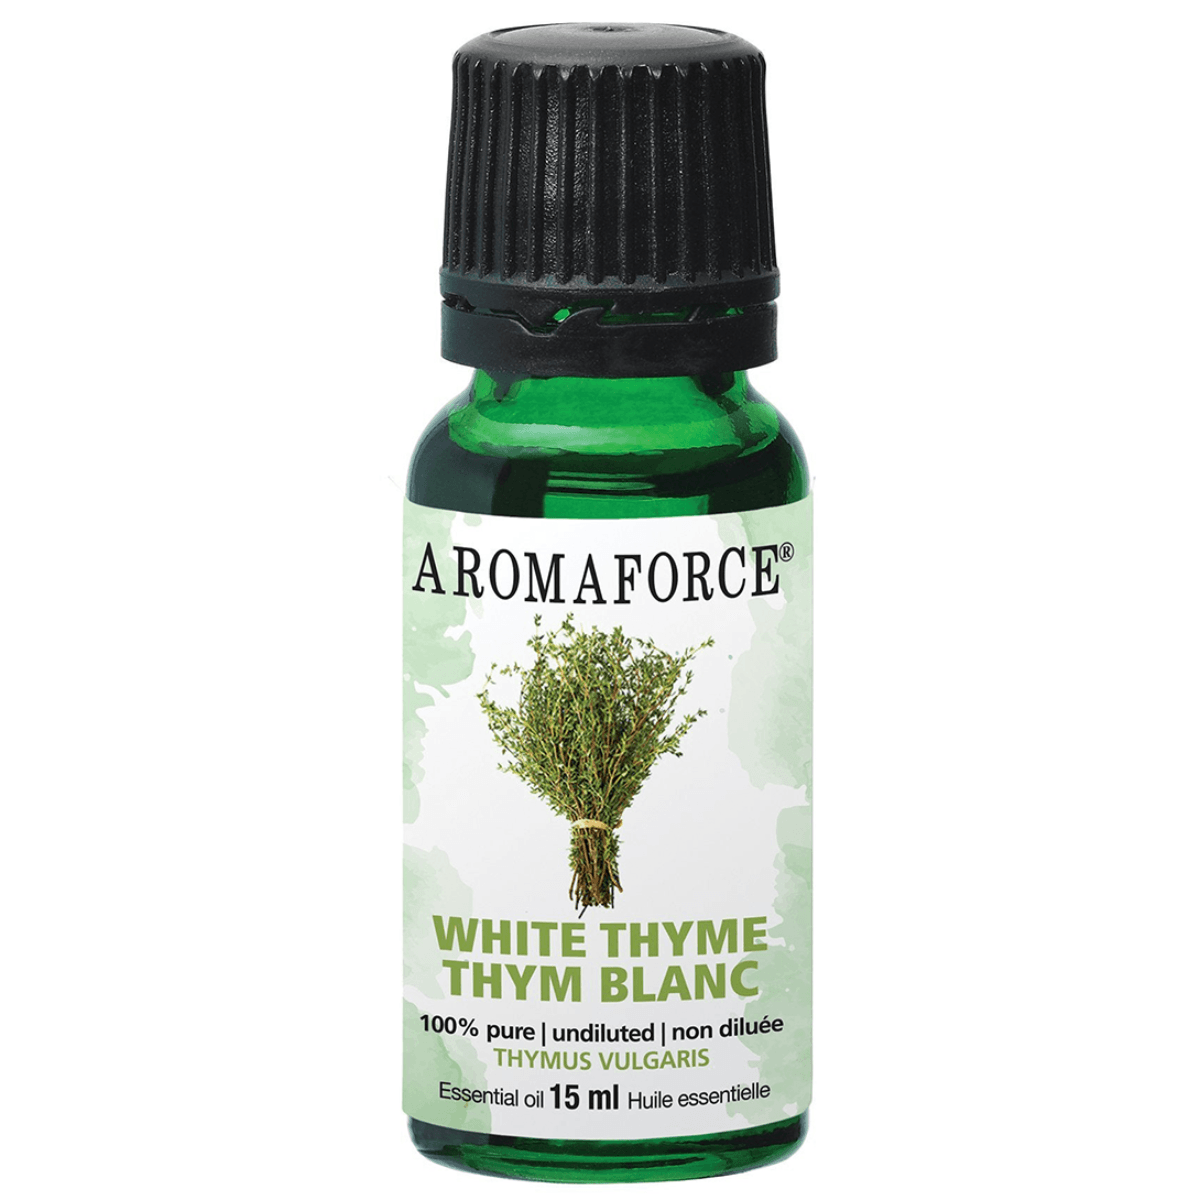 Aromaforce Essential Oil White Thyme 15mL Essential Oils at Village Vitamin Store